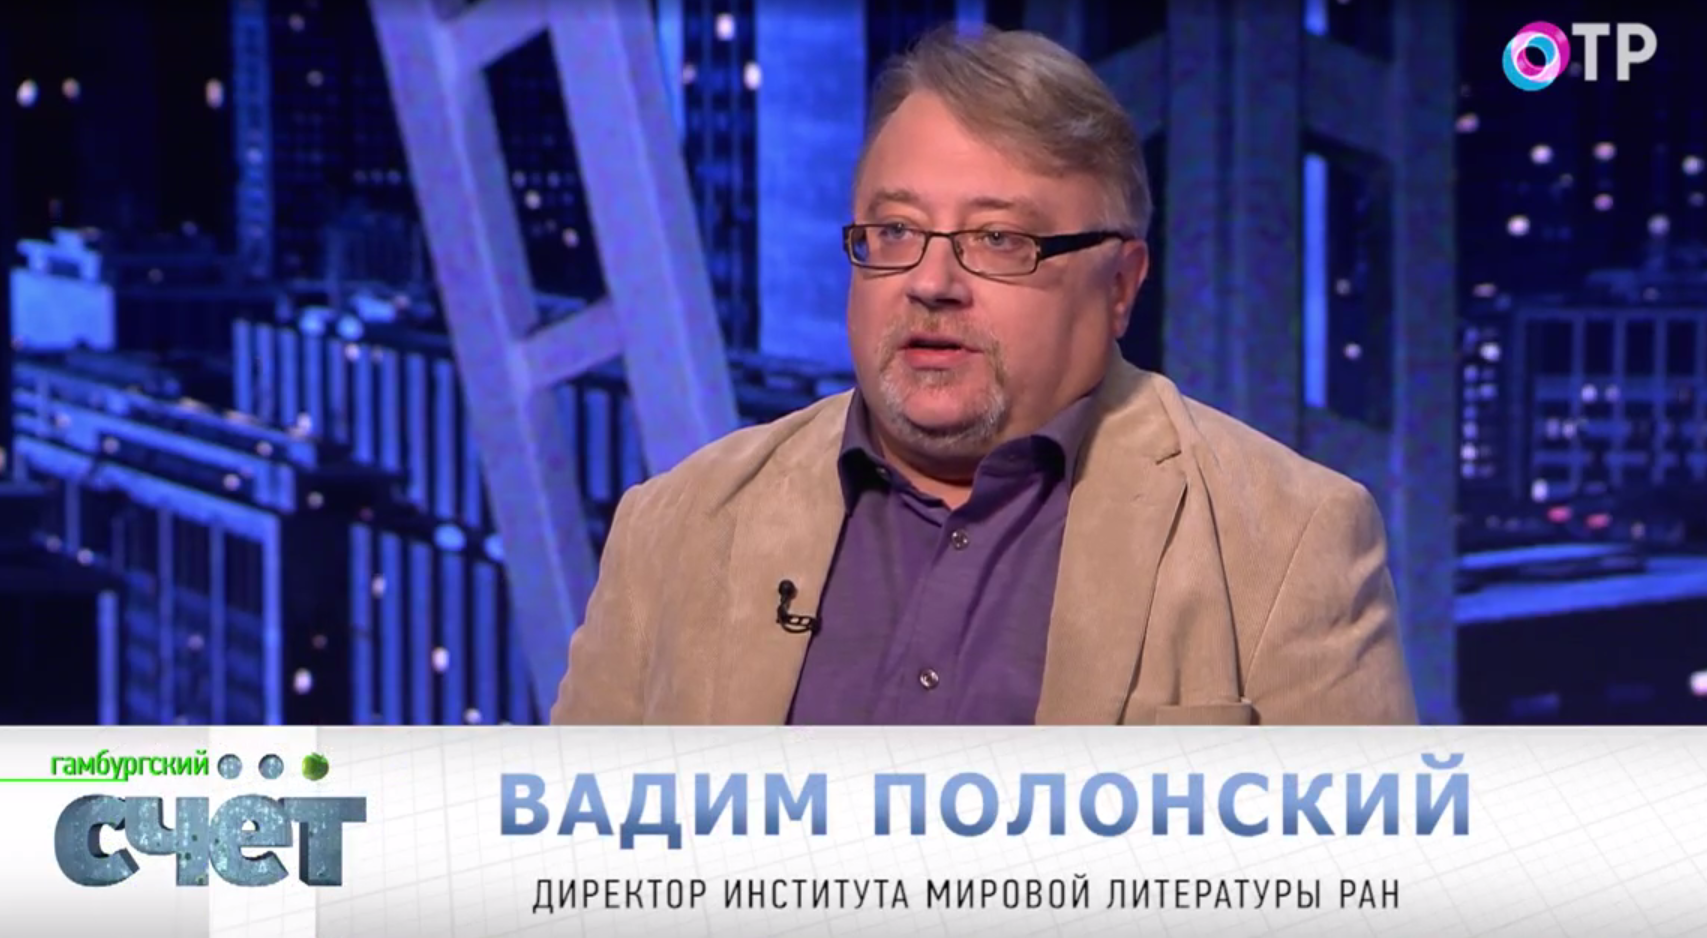 Вадим Полонский в программе "Гамбургский счет" на ОТР